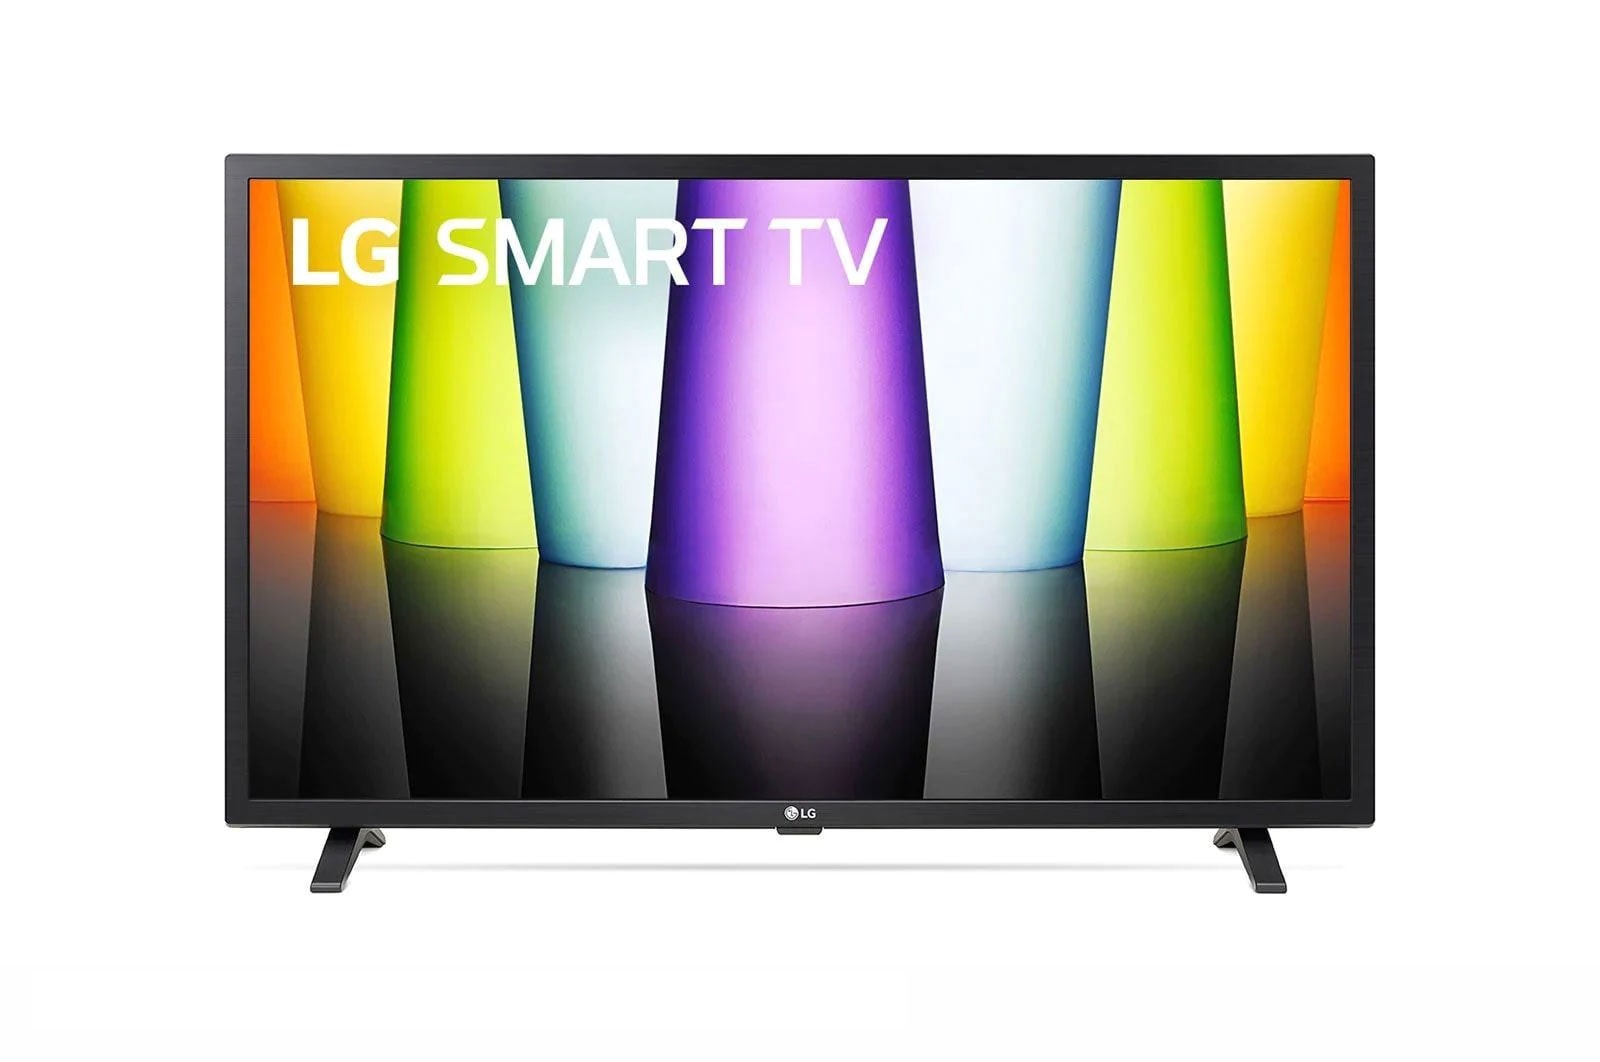 LG LED TV LQ63 32 (81.28cm) AI Smart HD TV, WebOS, ThinQ AI, Active HDR, 20W - 32LQ636BPSA